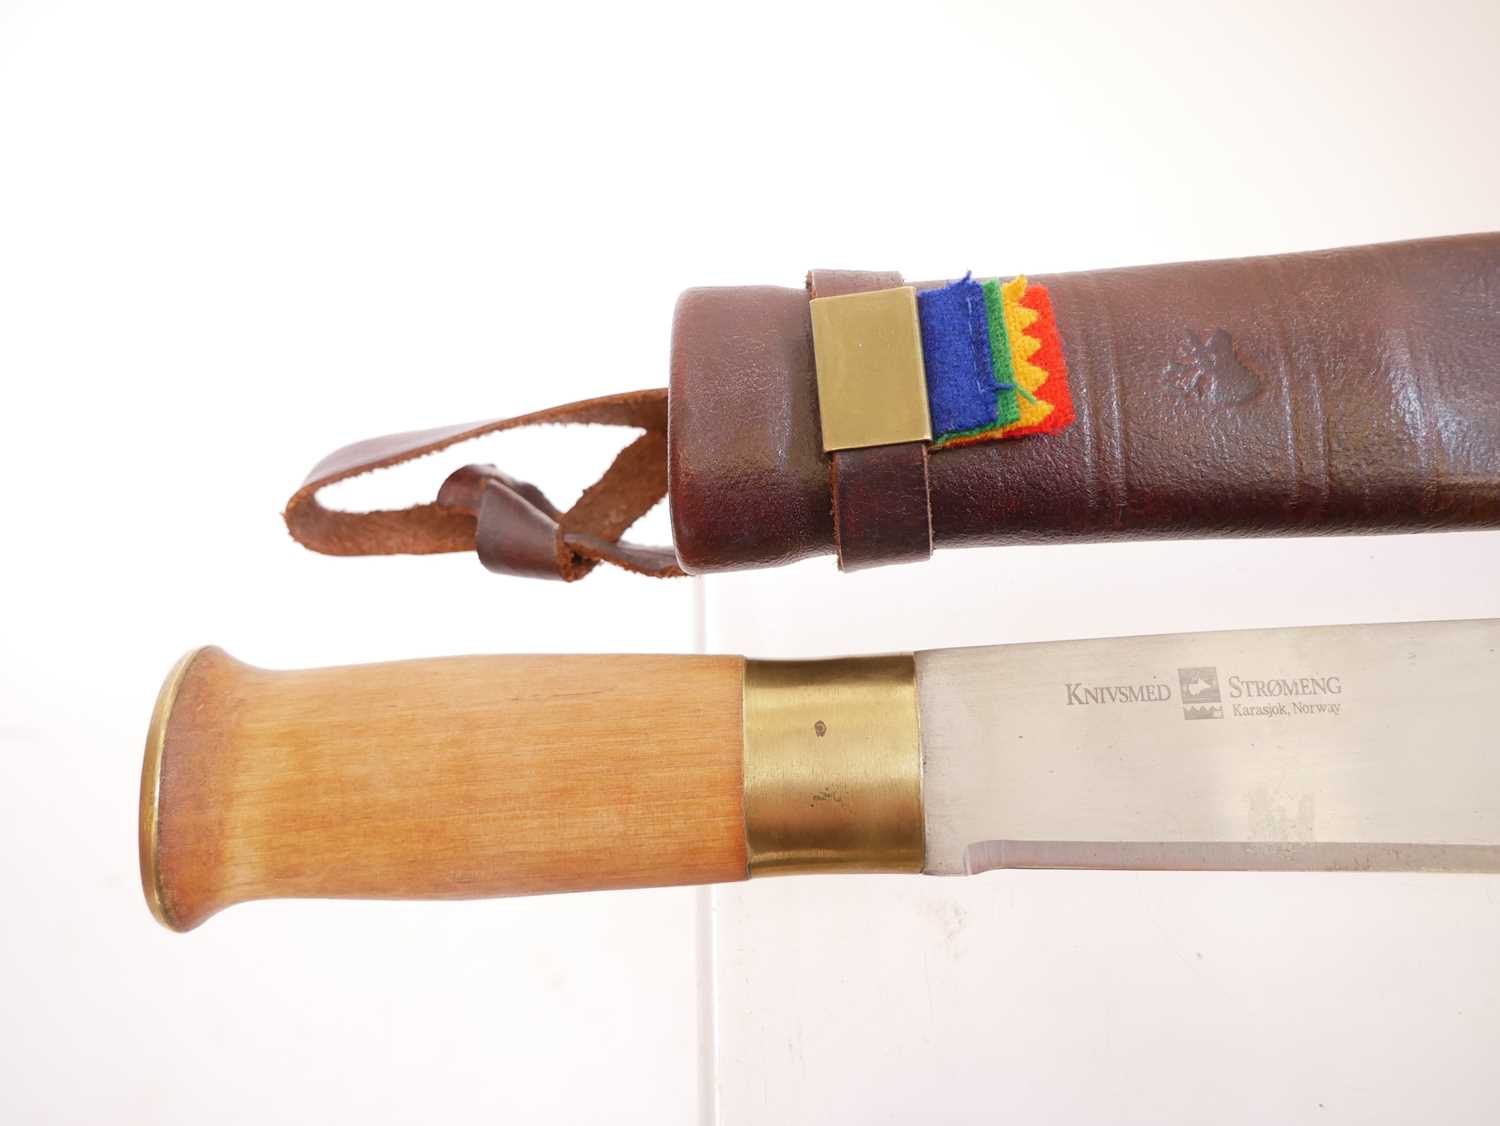 Knivsmed hunting knife, 9inch blade marked 'Knivsmed Stromeng Karasjok, Norway' with leather - Bild 6 aus 7